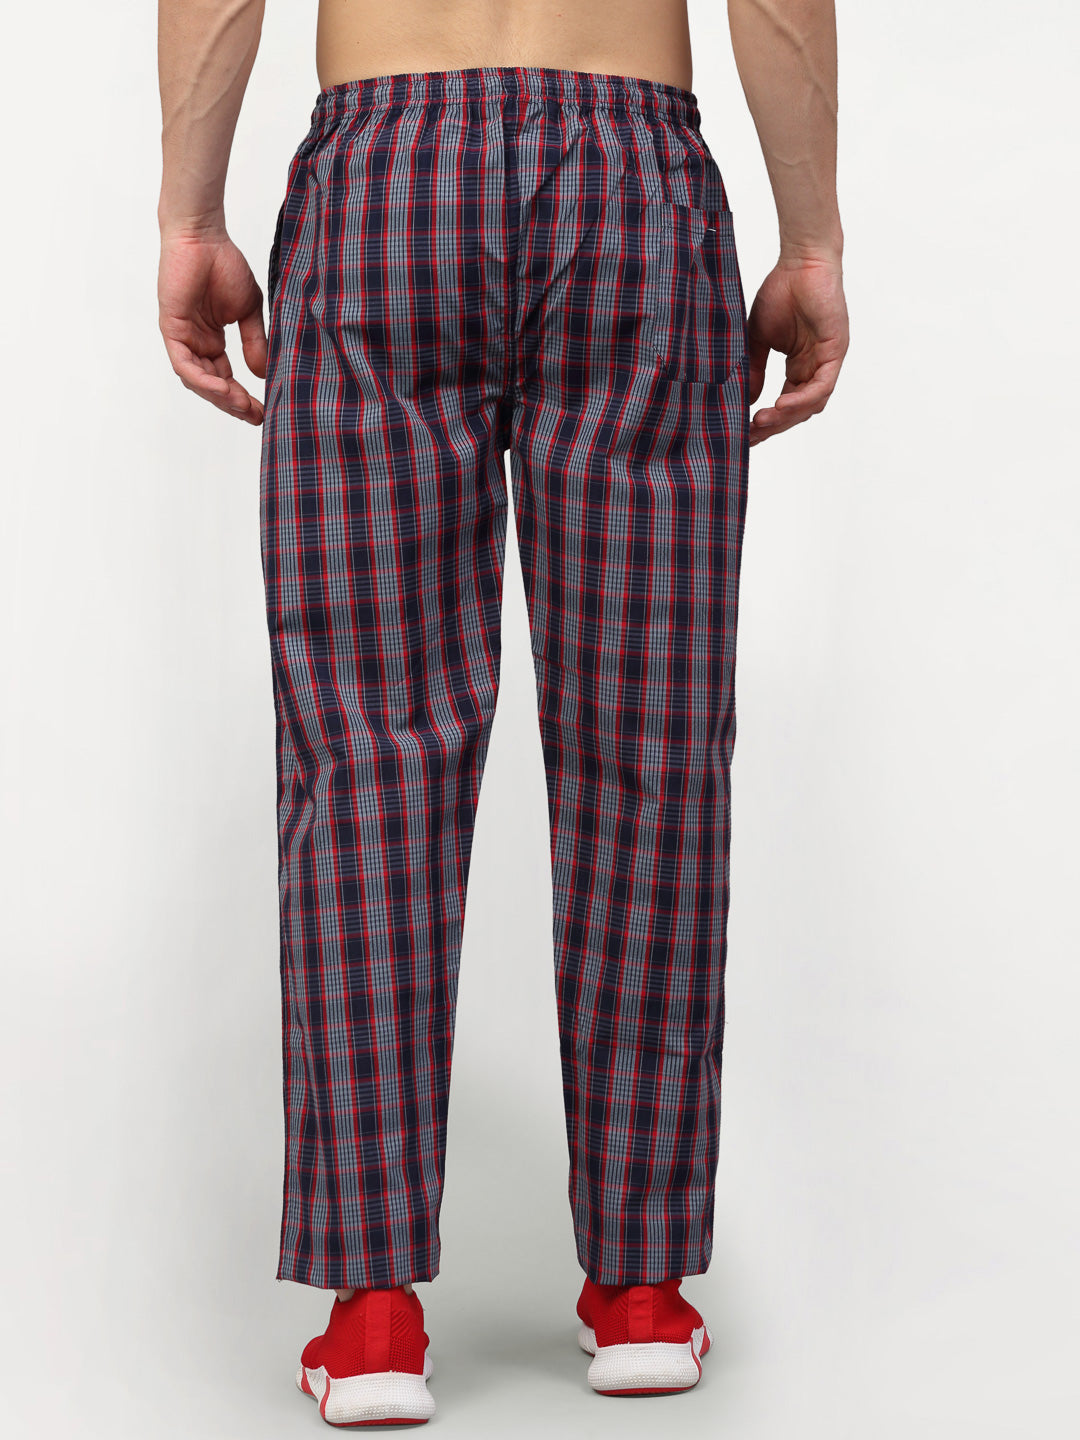 Men's Grey Cotton Checked Track Pants ( JOG 019Grey-Red ) - Jainish